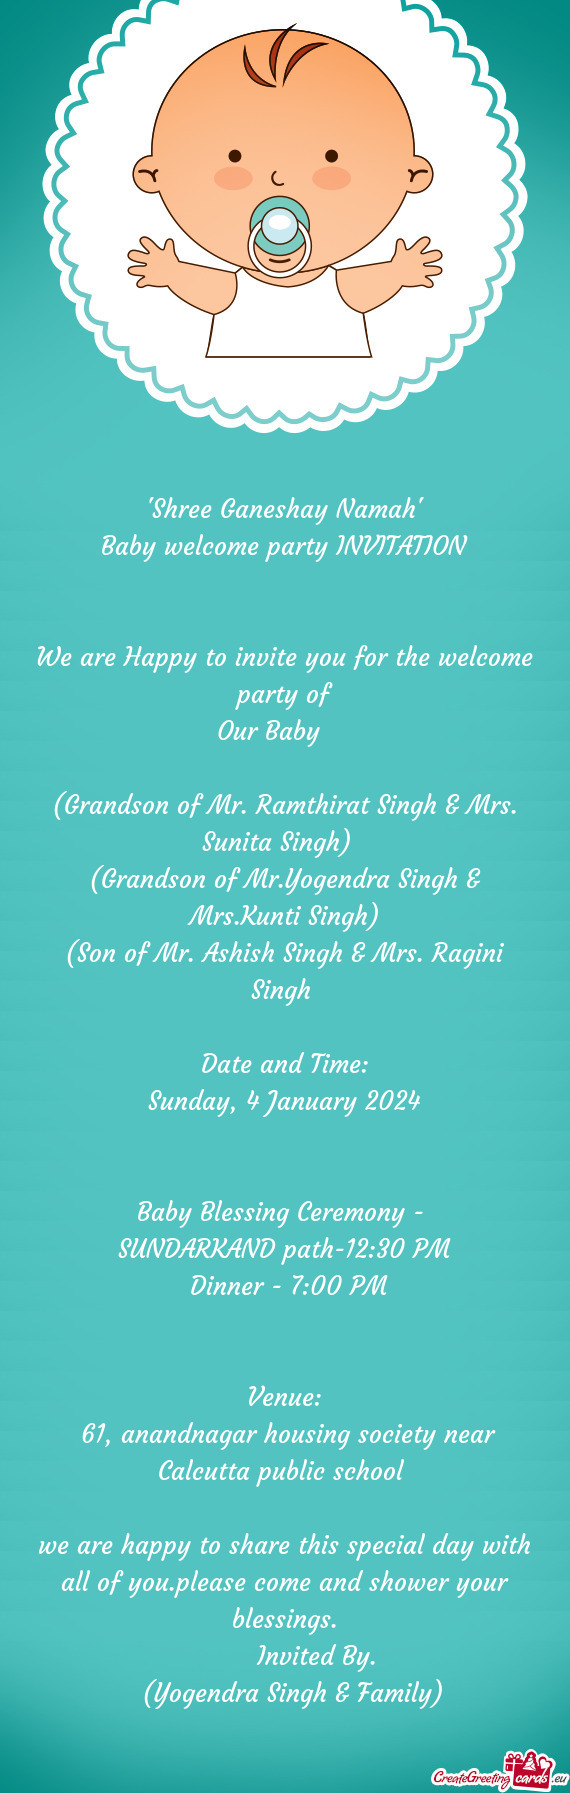 (Grandson of Mr. Ramthirat Singh & Mrs. Sunita Singh)